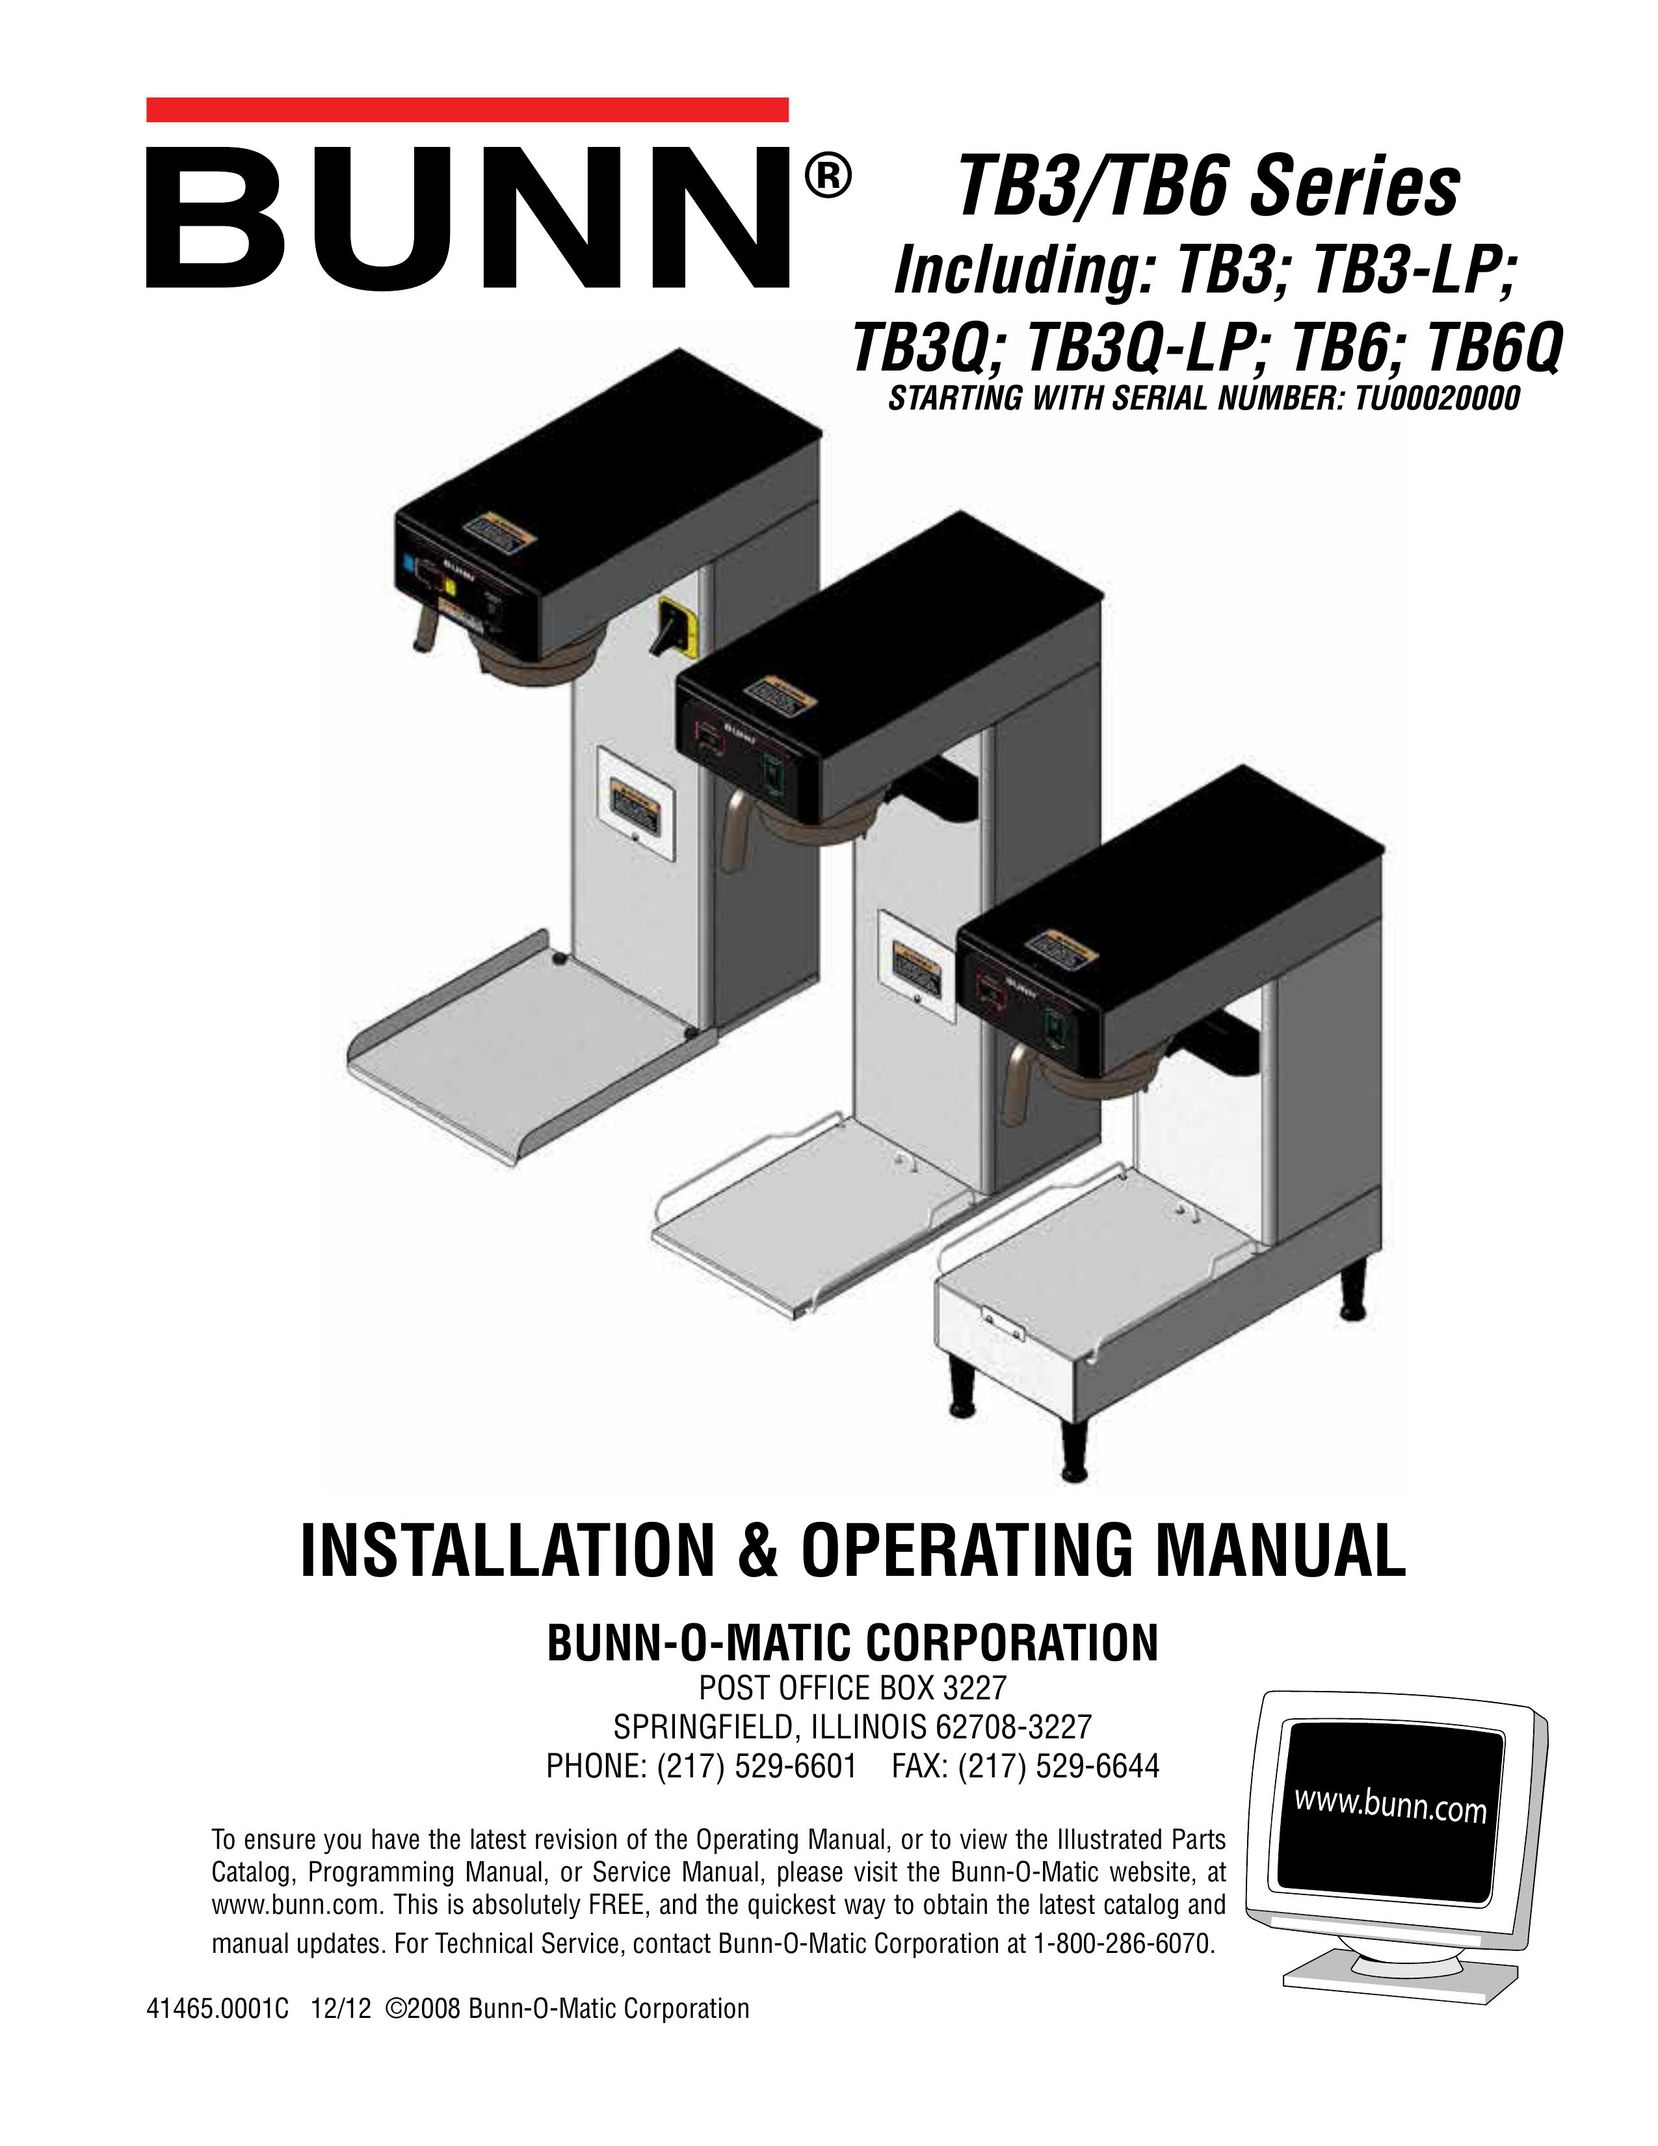 Bunn TB3-LP Hot Beverage Maker User Manual